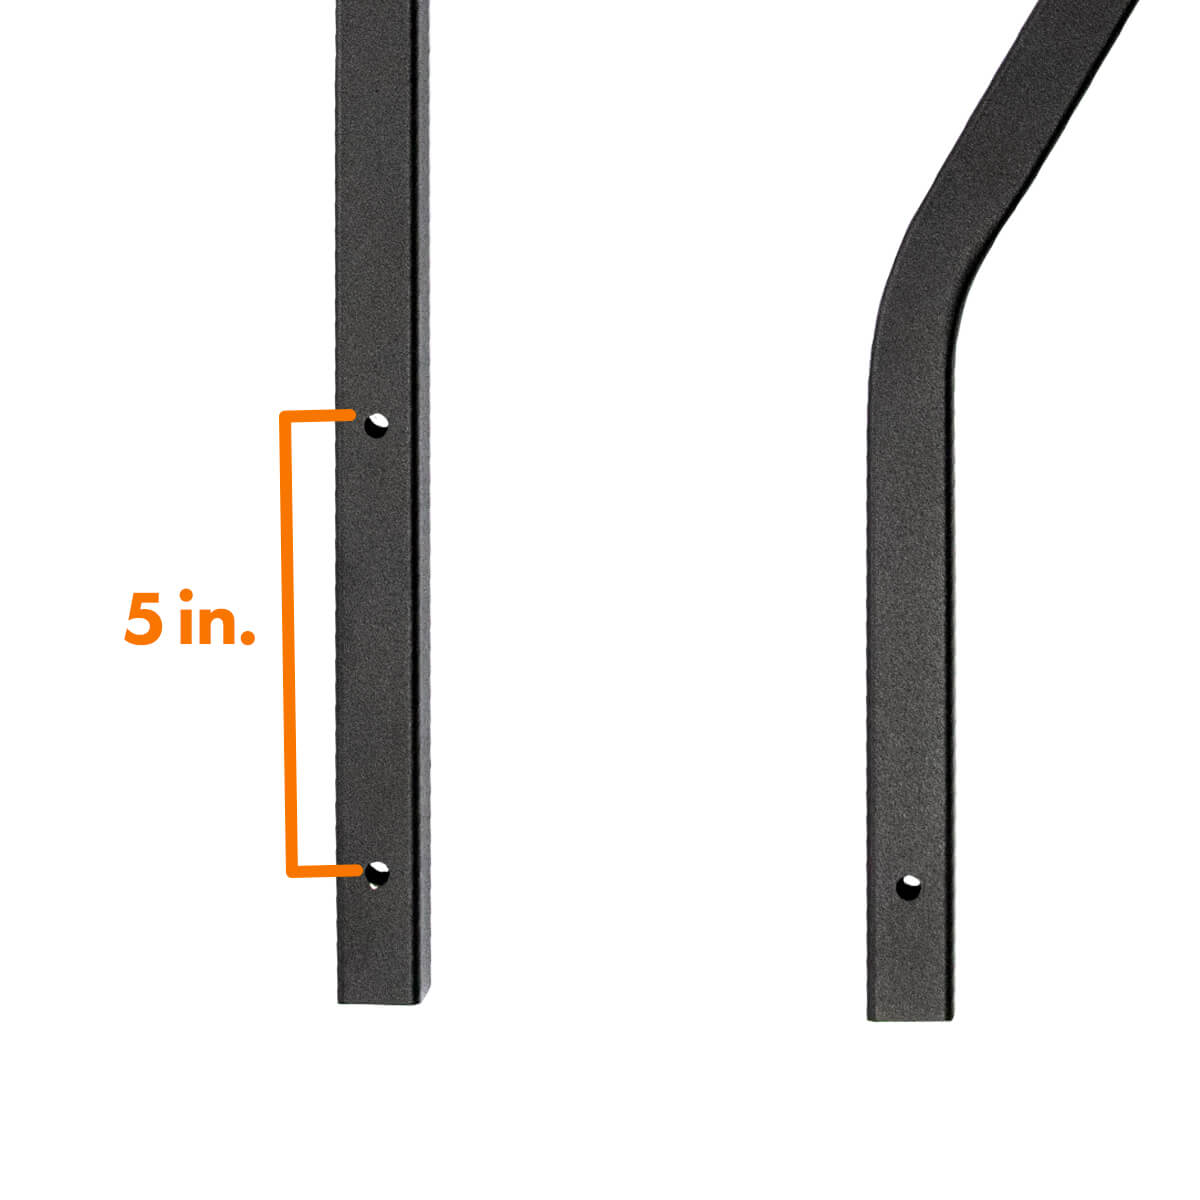 3-Step-Handrail-Gen-1-Measurement_web